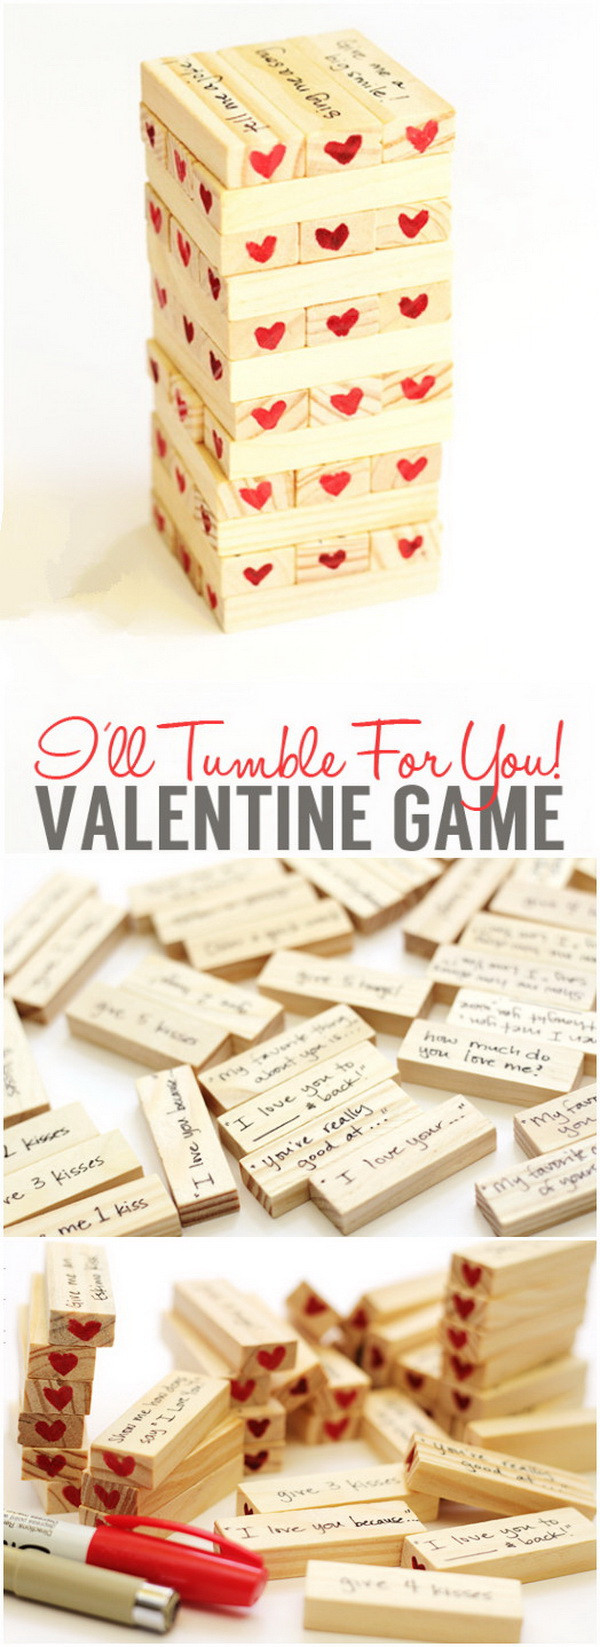 Cute Boyfriend Gift Ideas For Valentines Day
 Easy DIY Valentine s Day Gifts for Boyfriend Listing More